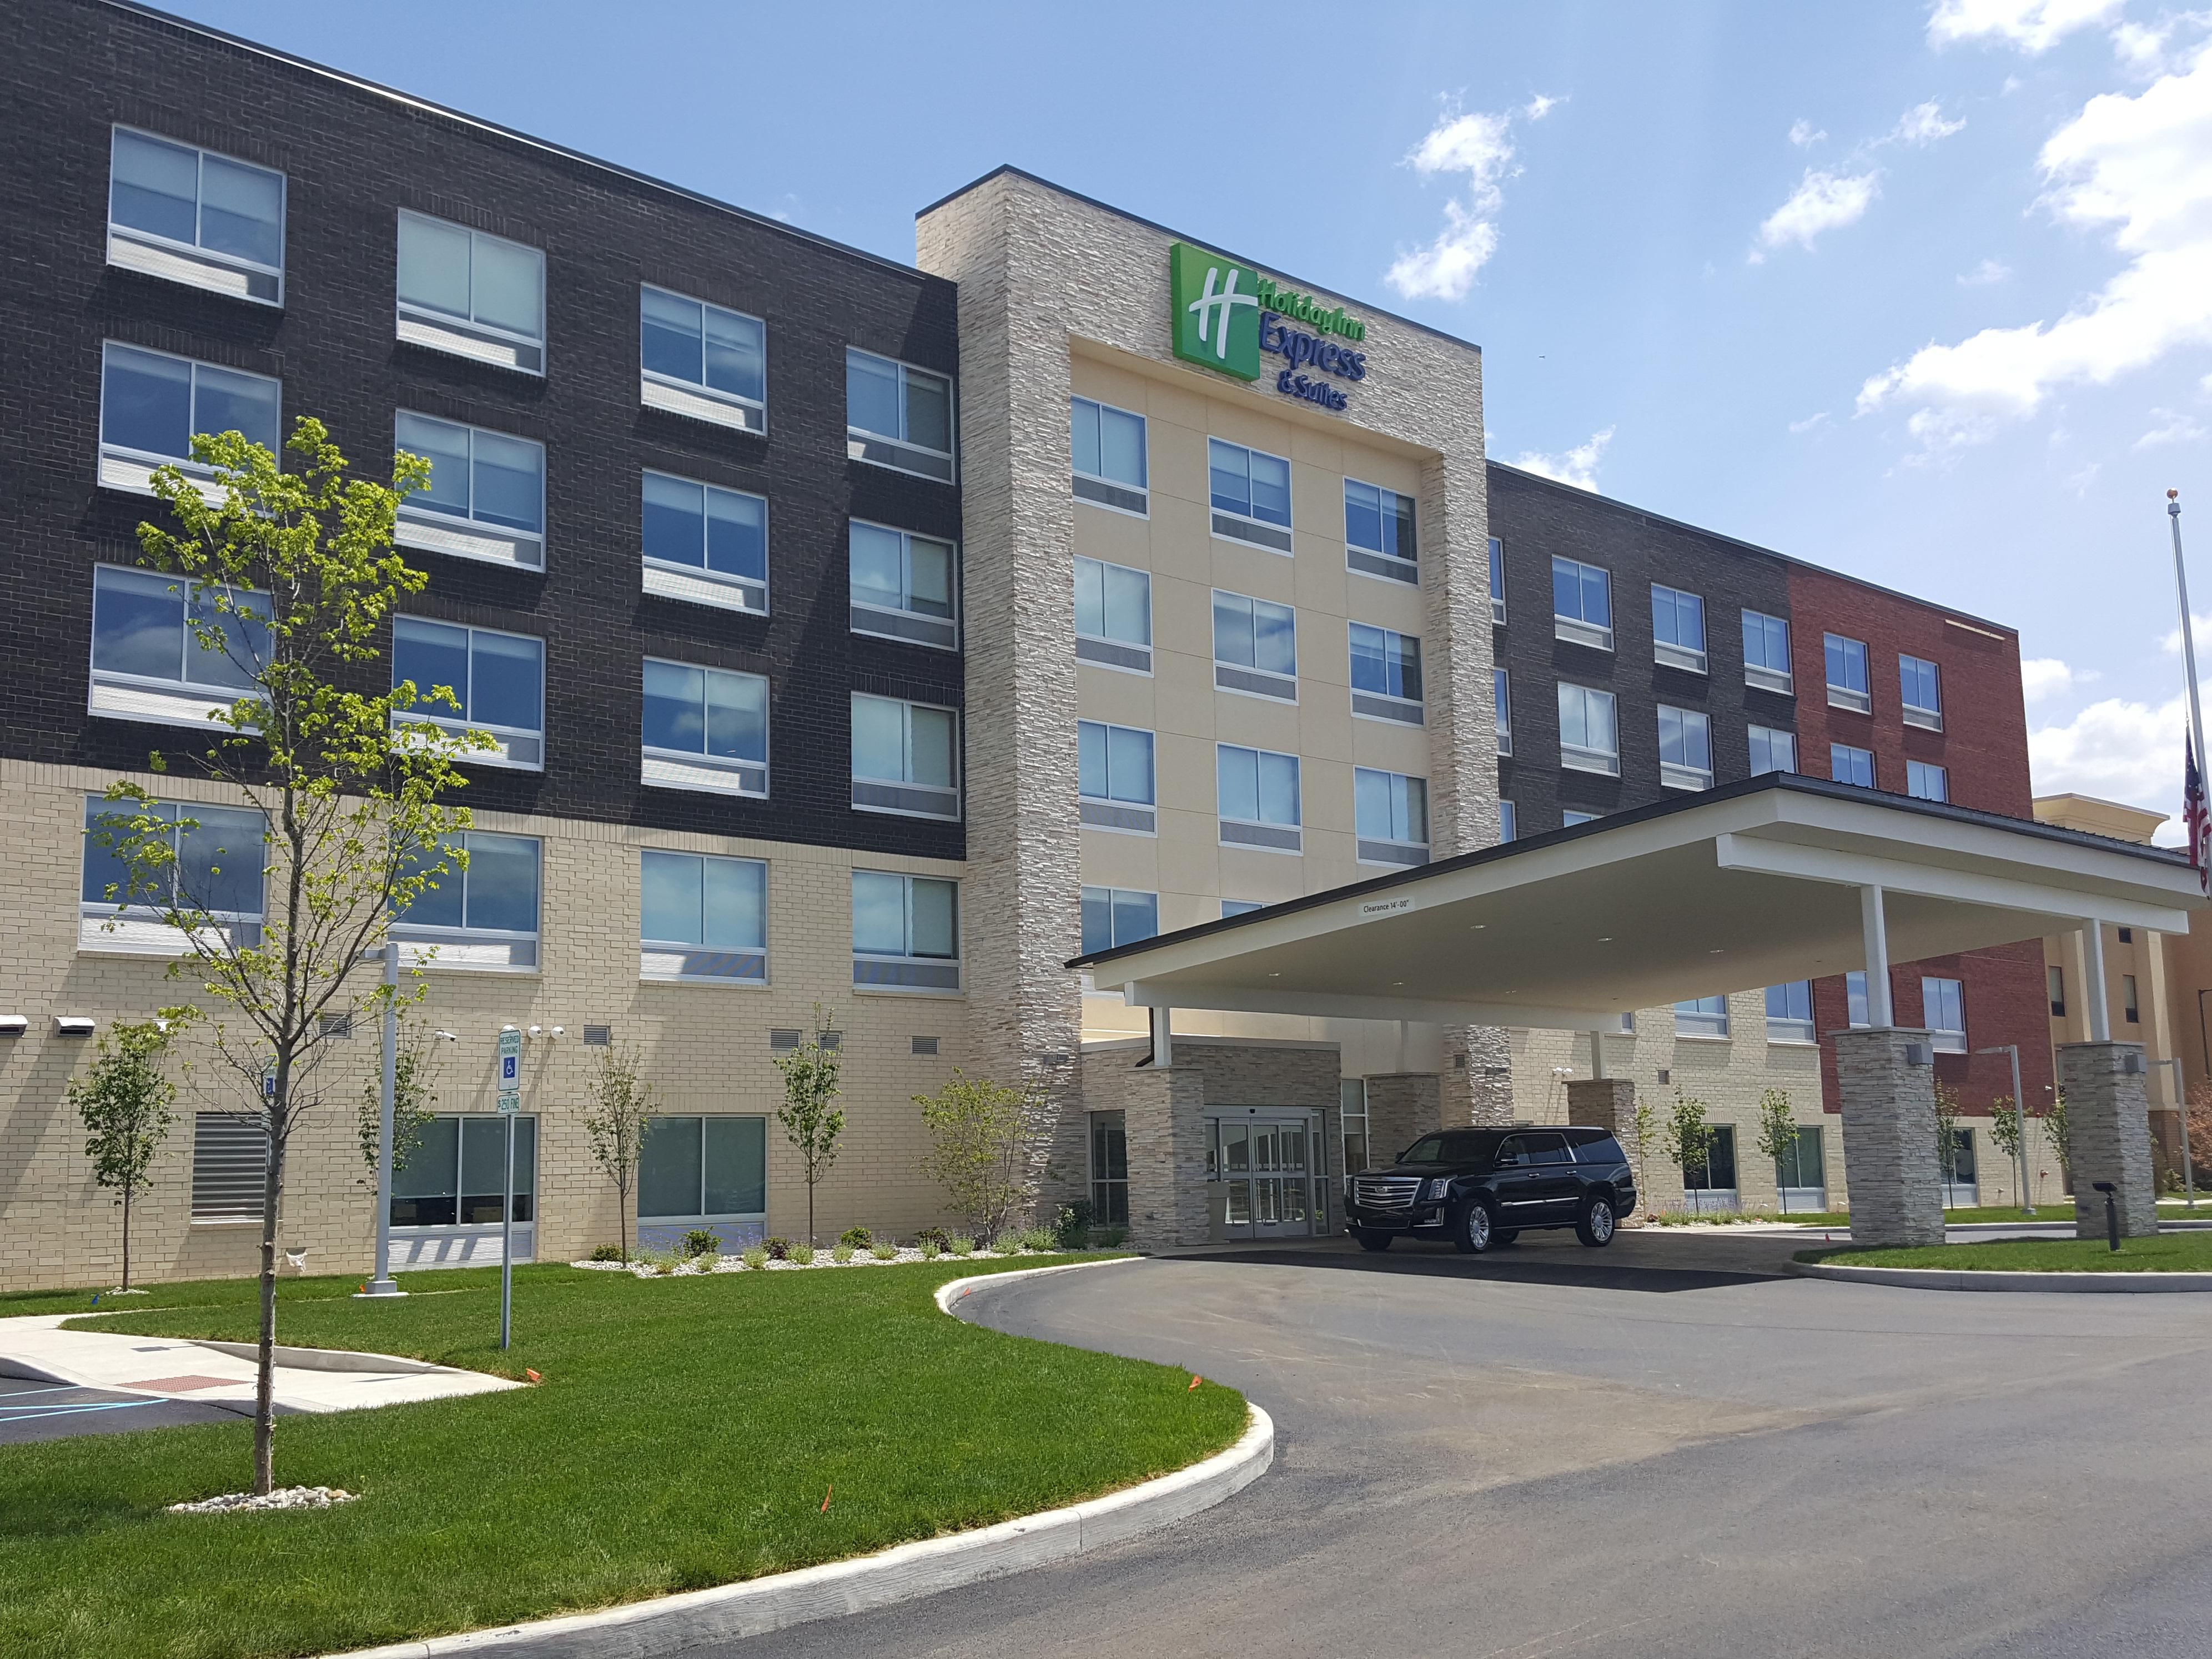 Hotels in Toledo, Ohio | Holiday Inn Express & Suites Toledo West